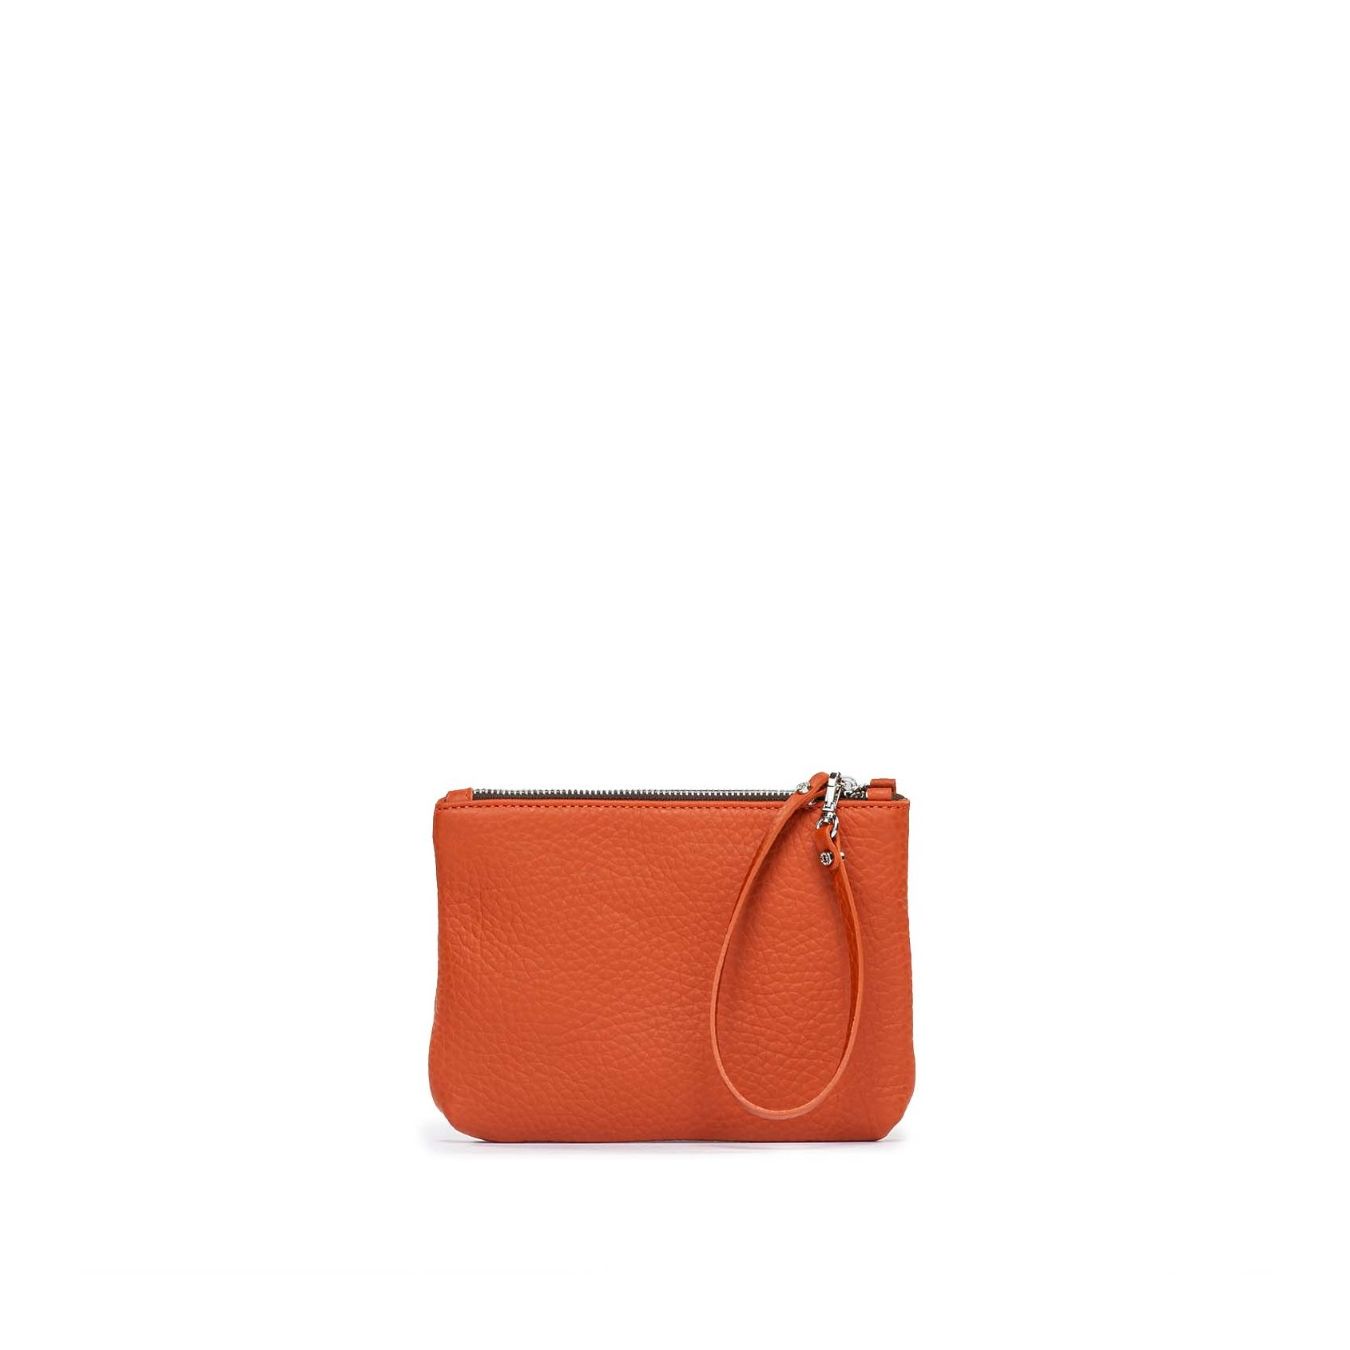 pochette borsa euforia arancio gianni chiarini